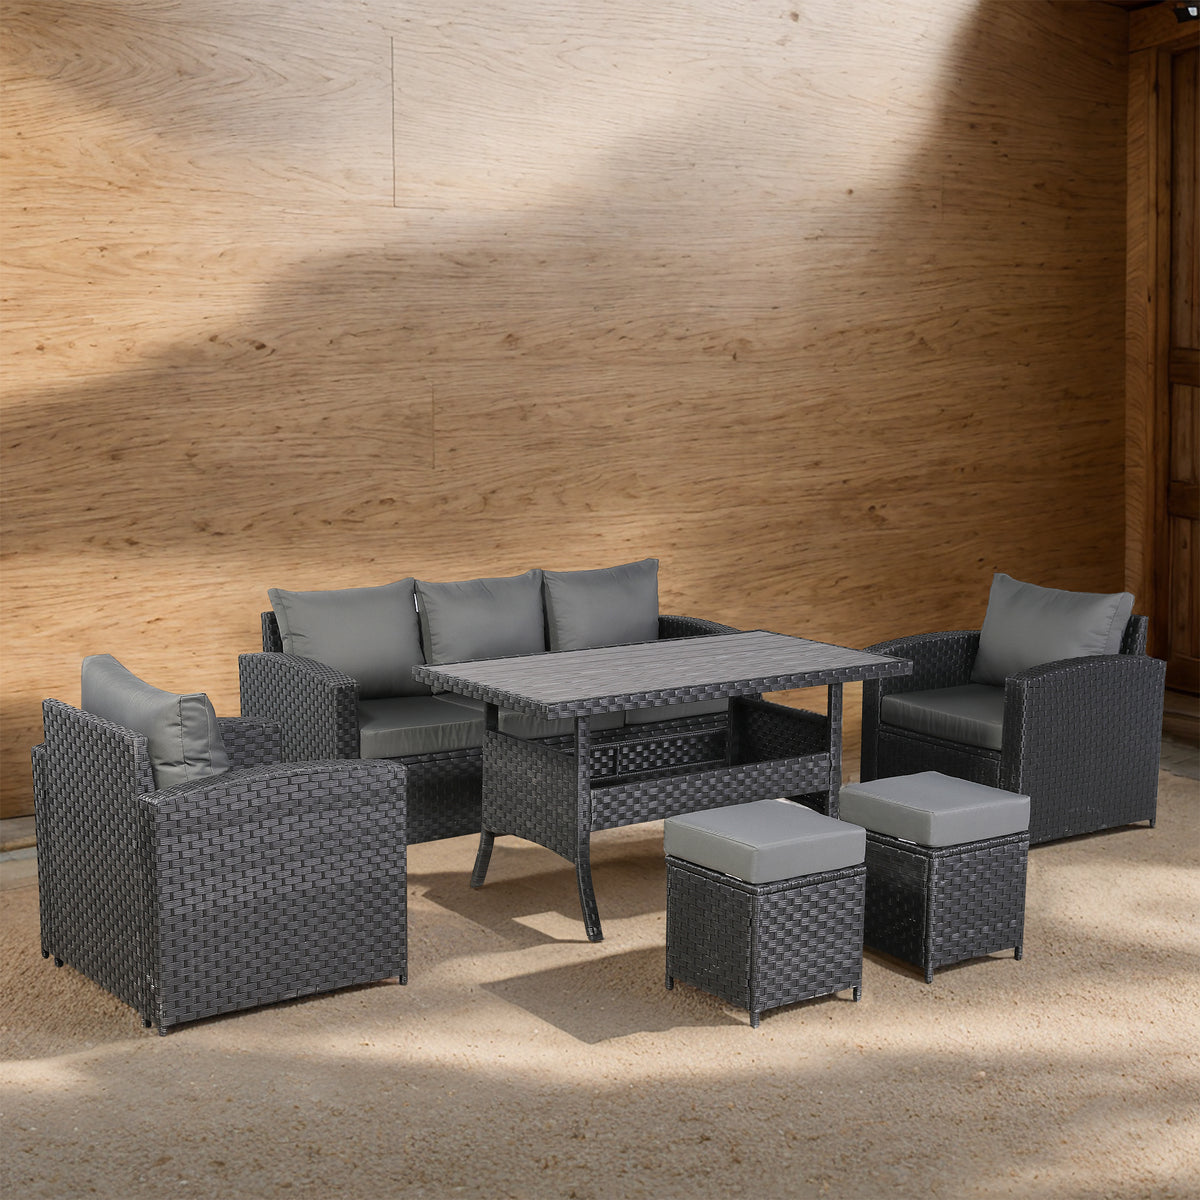 Primo Range High Back Dining Corner Sofa Set in Black Weave with Dinning Table